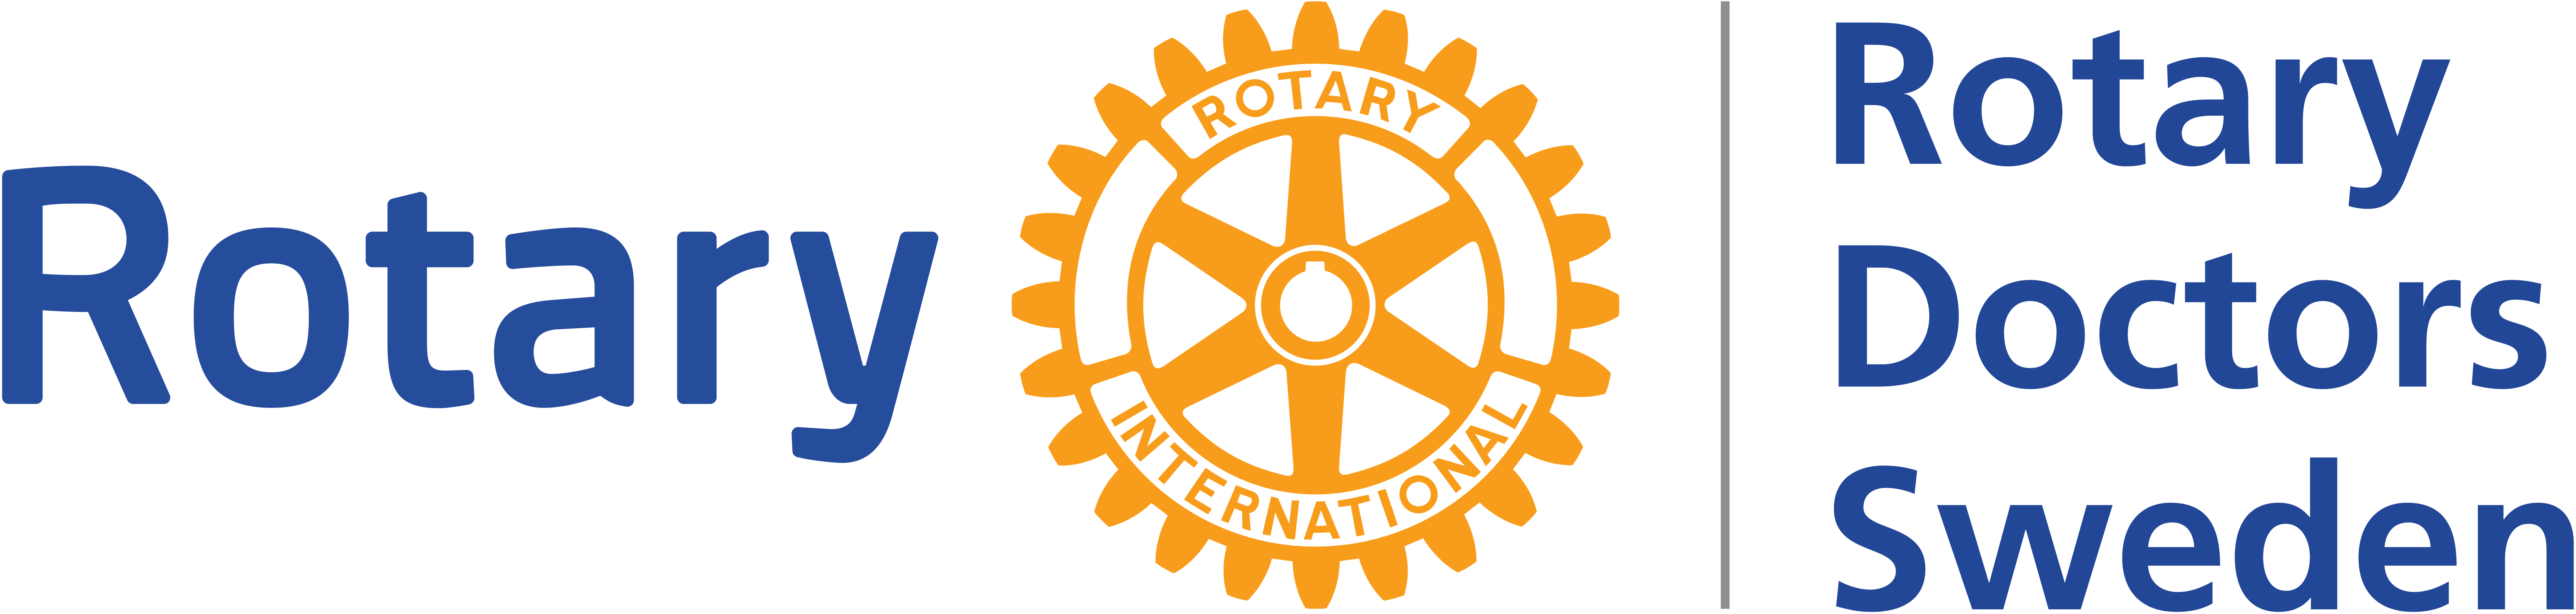 Rotary Doctors Sweden